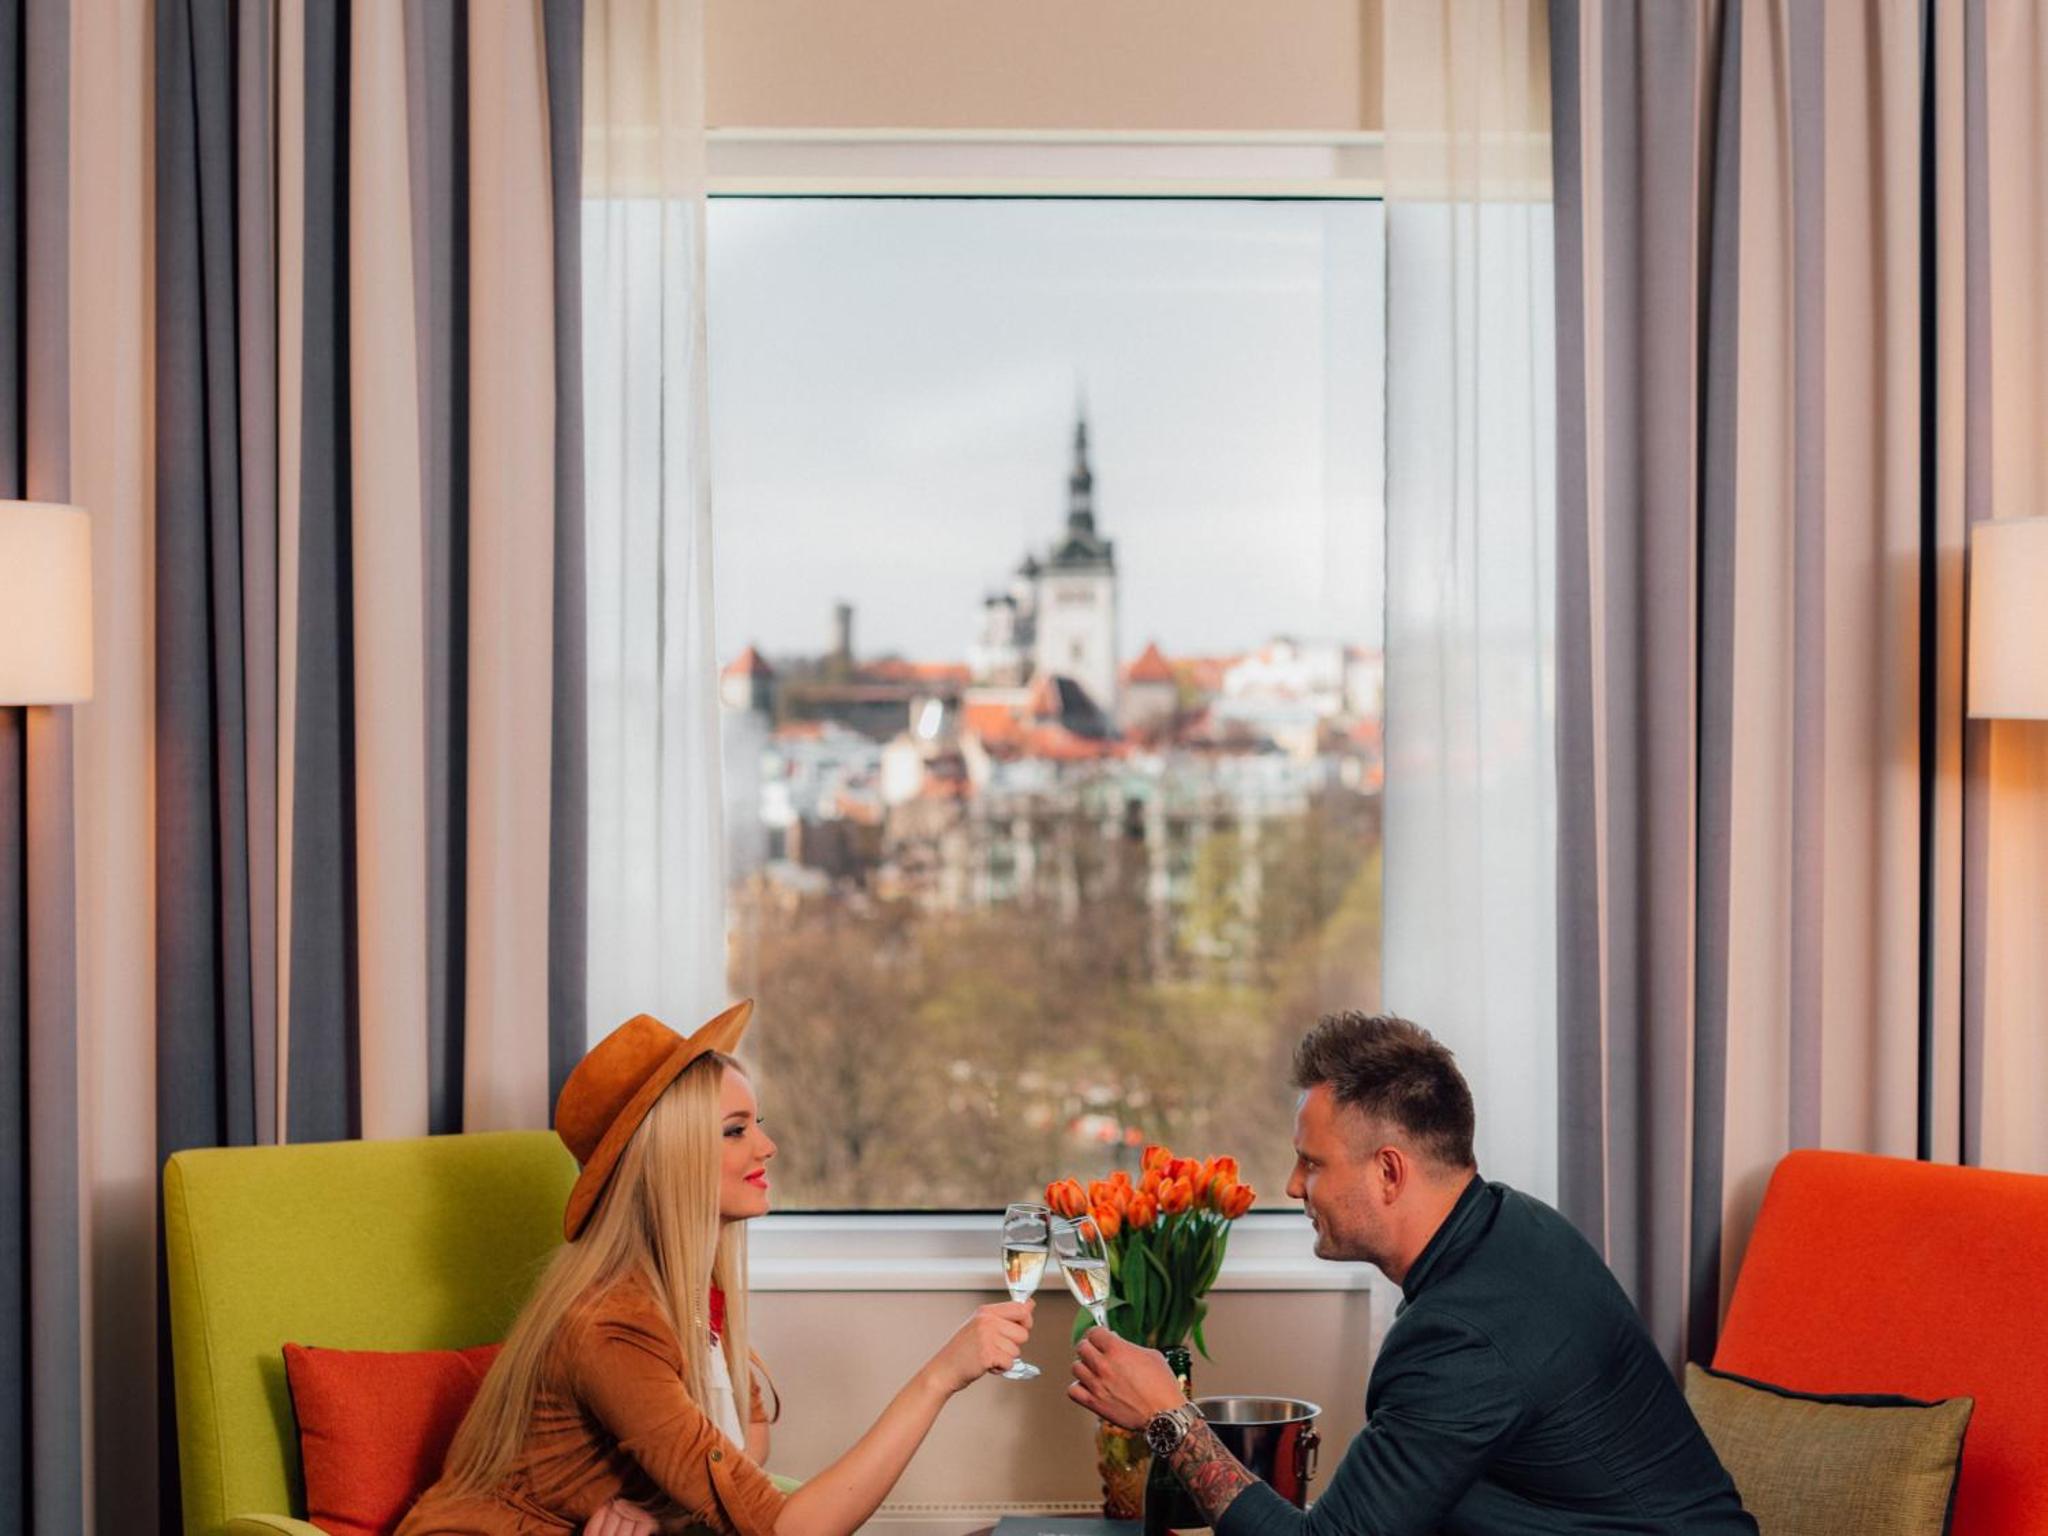 Original Sokos Hotel Viru, Tallinn